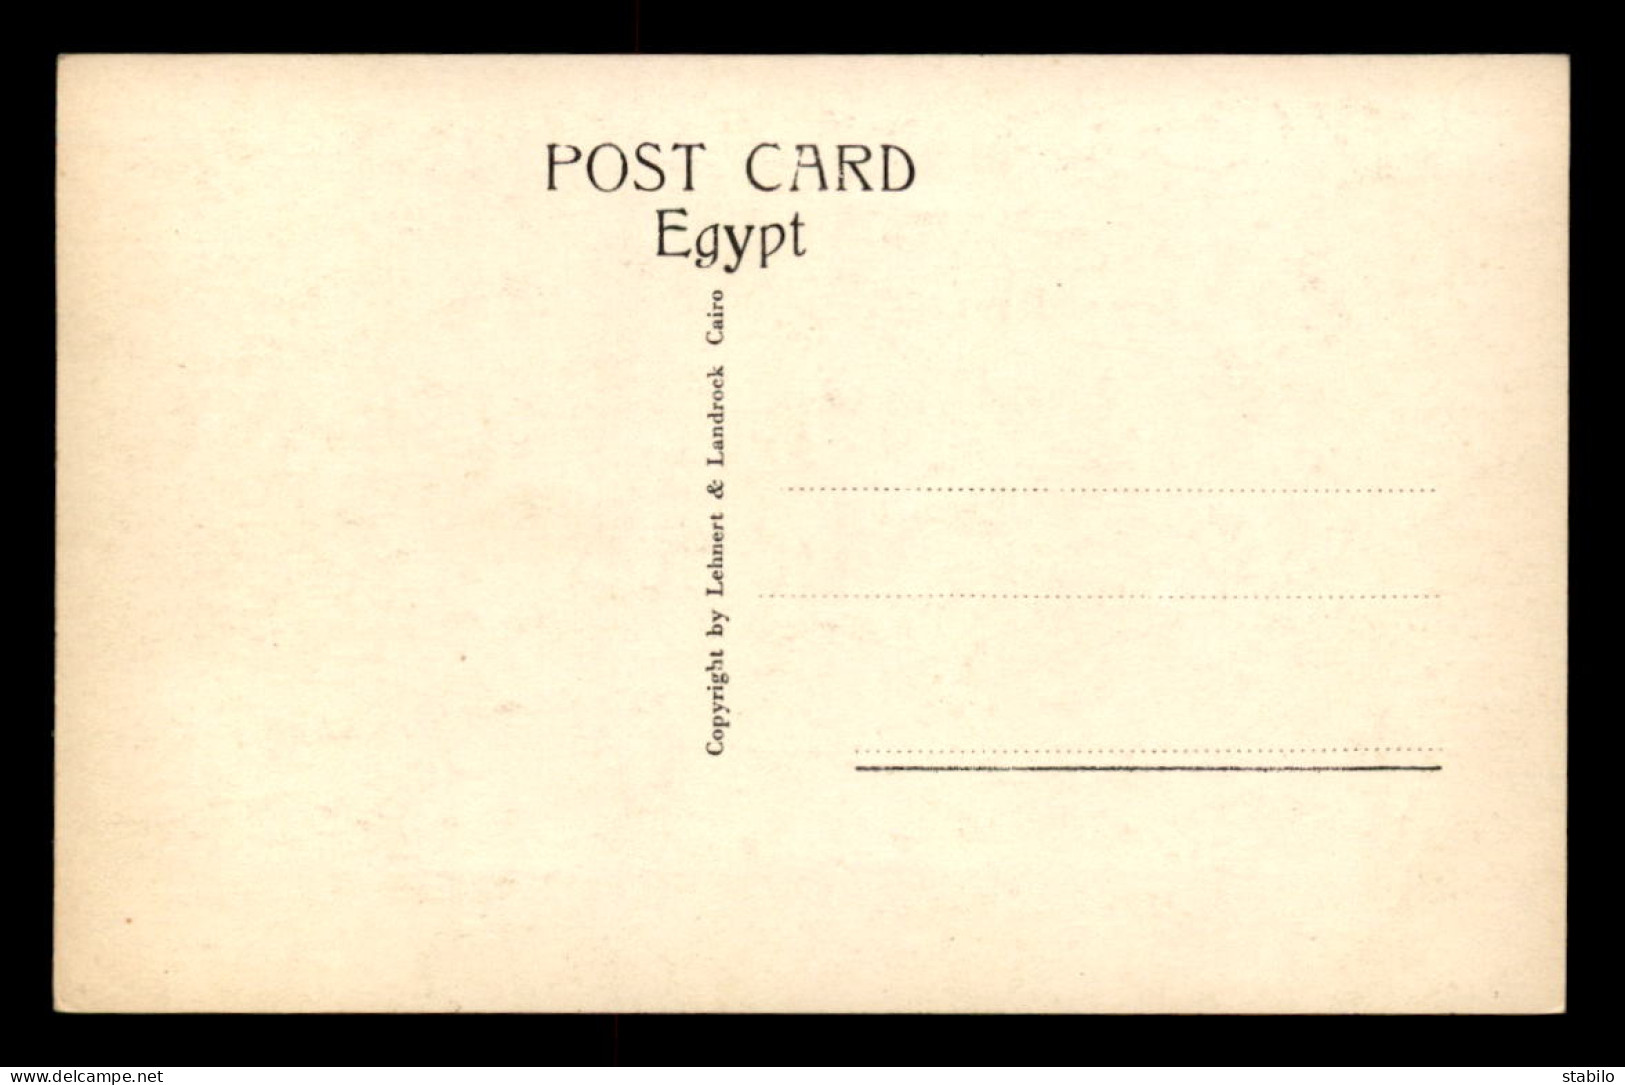 EGYPTE - LENHERT & LANDROCK N°107 - CAIRO - MAMELOUK TOMBS AND CITADEL - Cairo